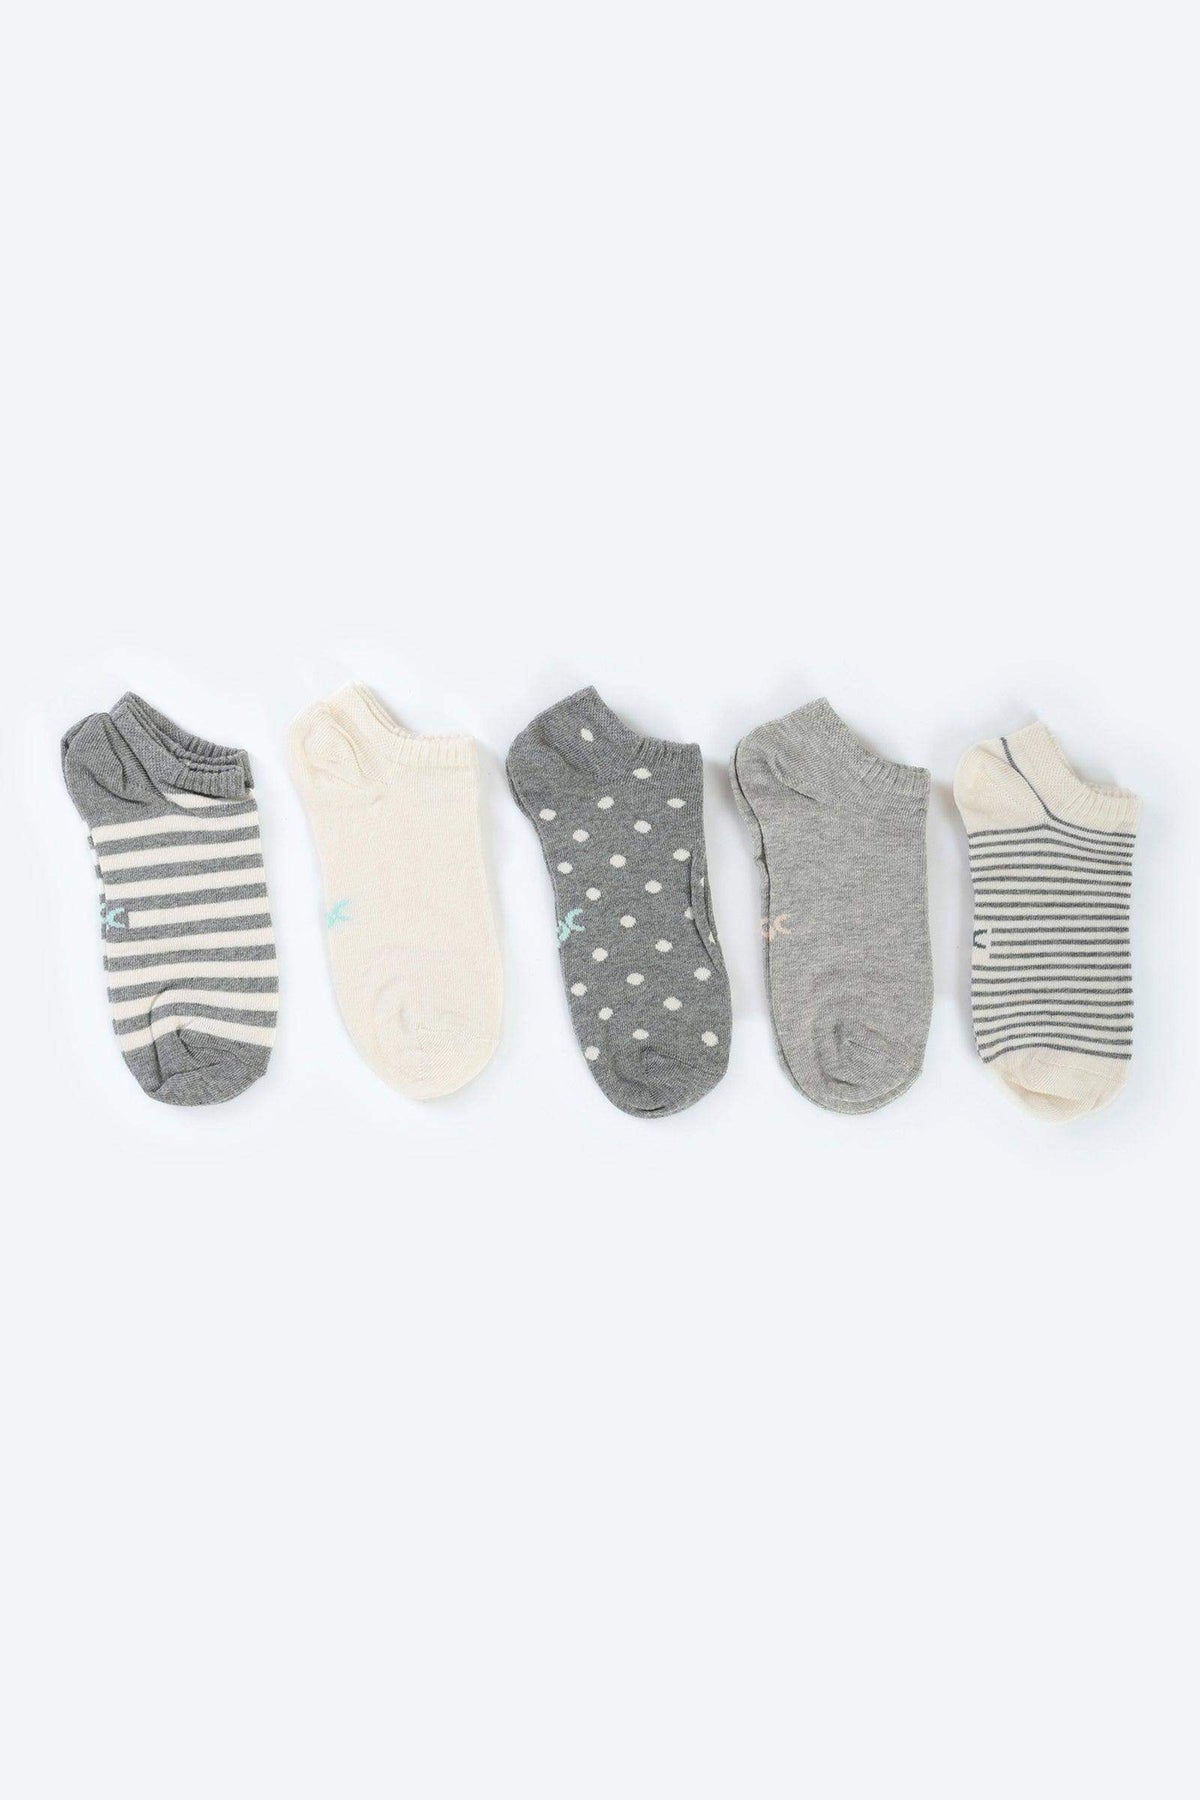 Cotton Ankle Socks - 5 Pairs - Carina - كارينا